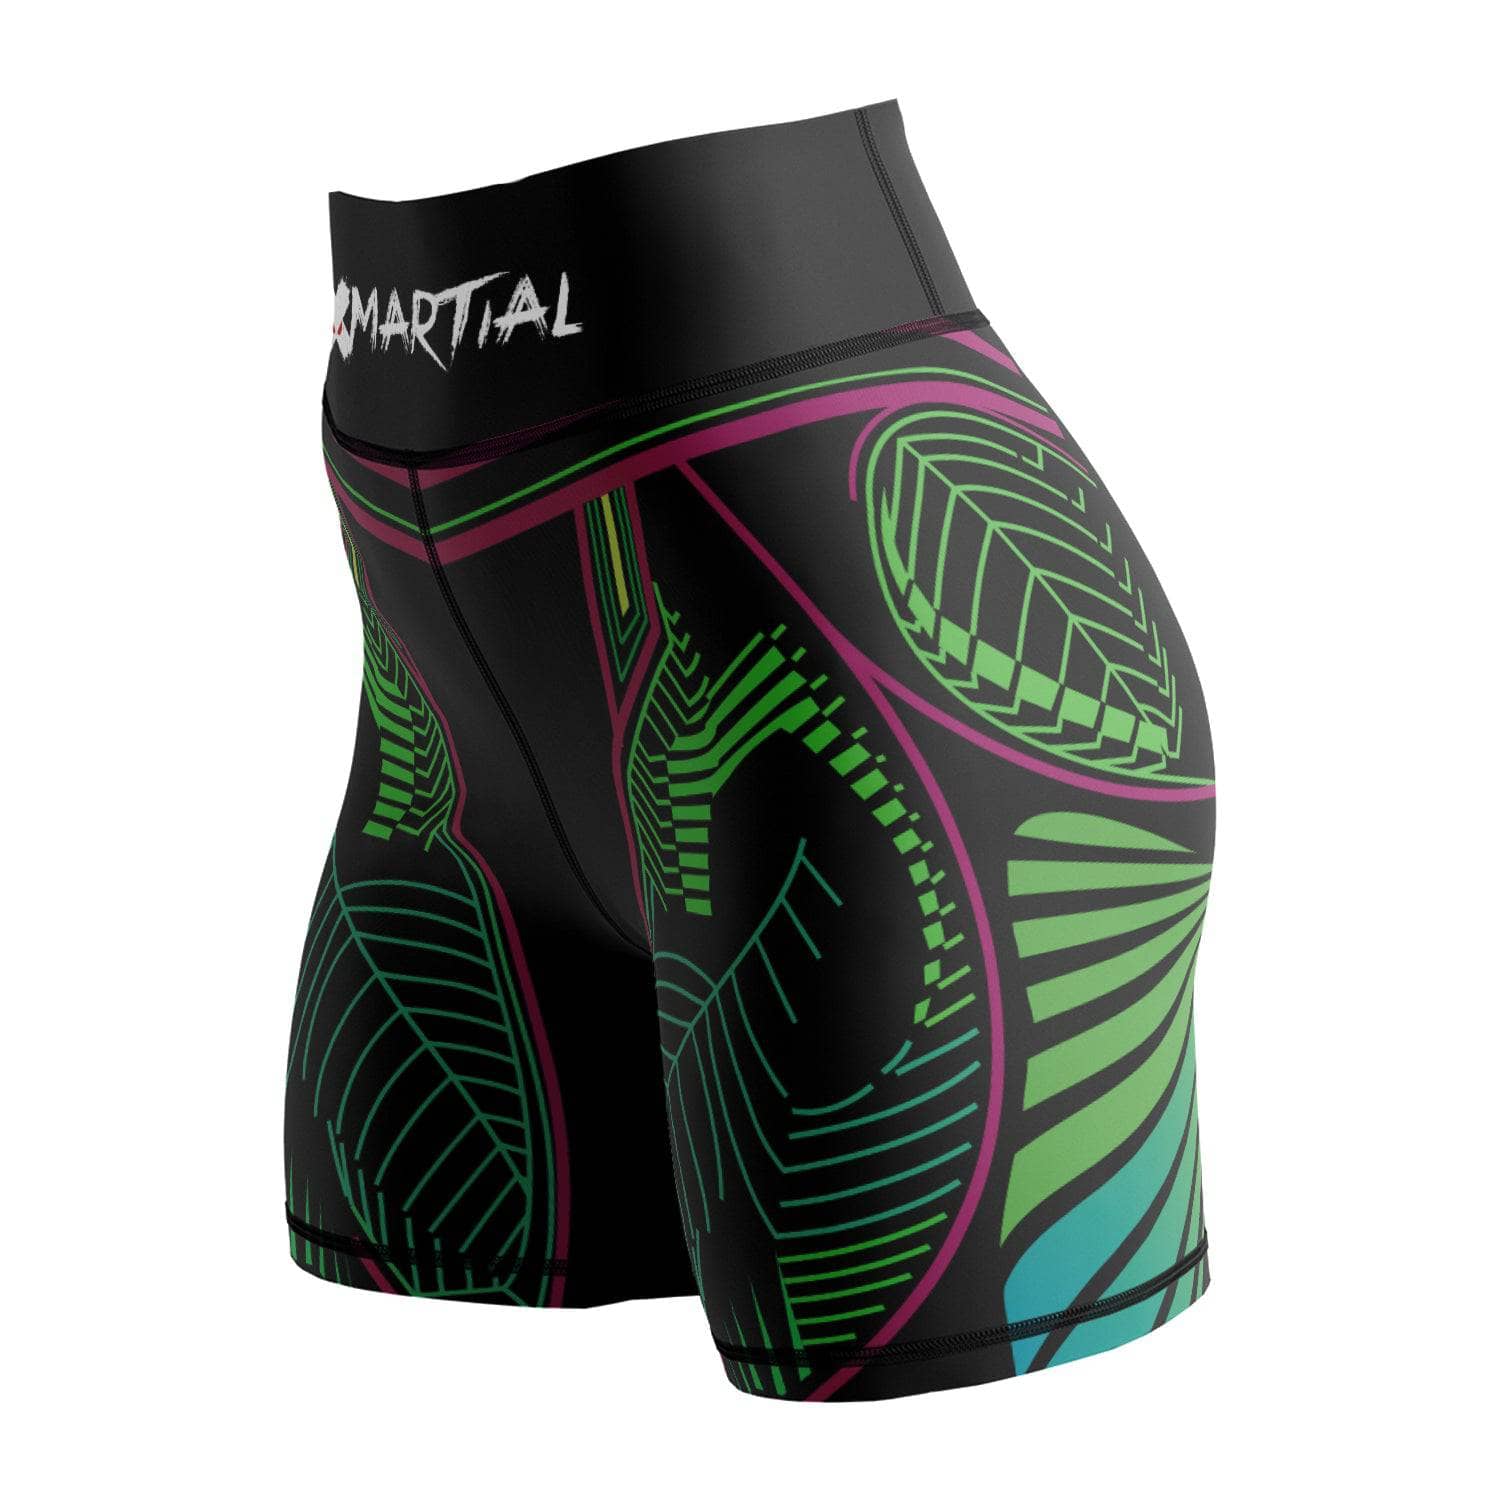 Tropical Women's BJJ/MMA Compression Shorts - XMARTIAL